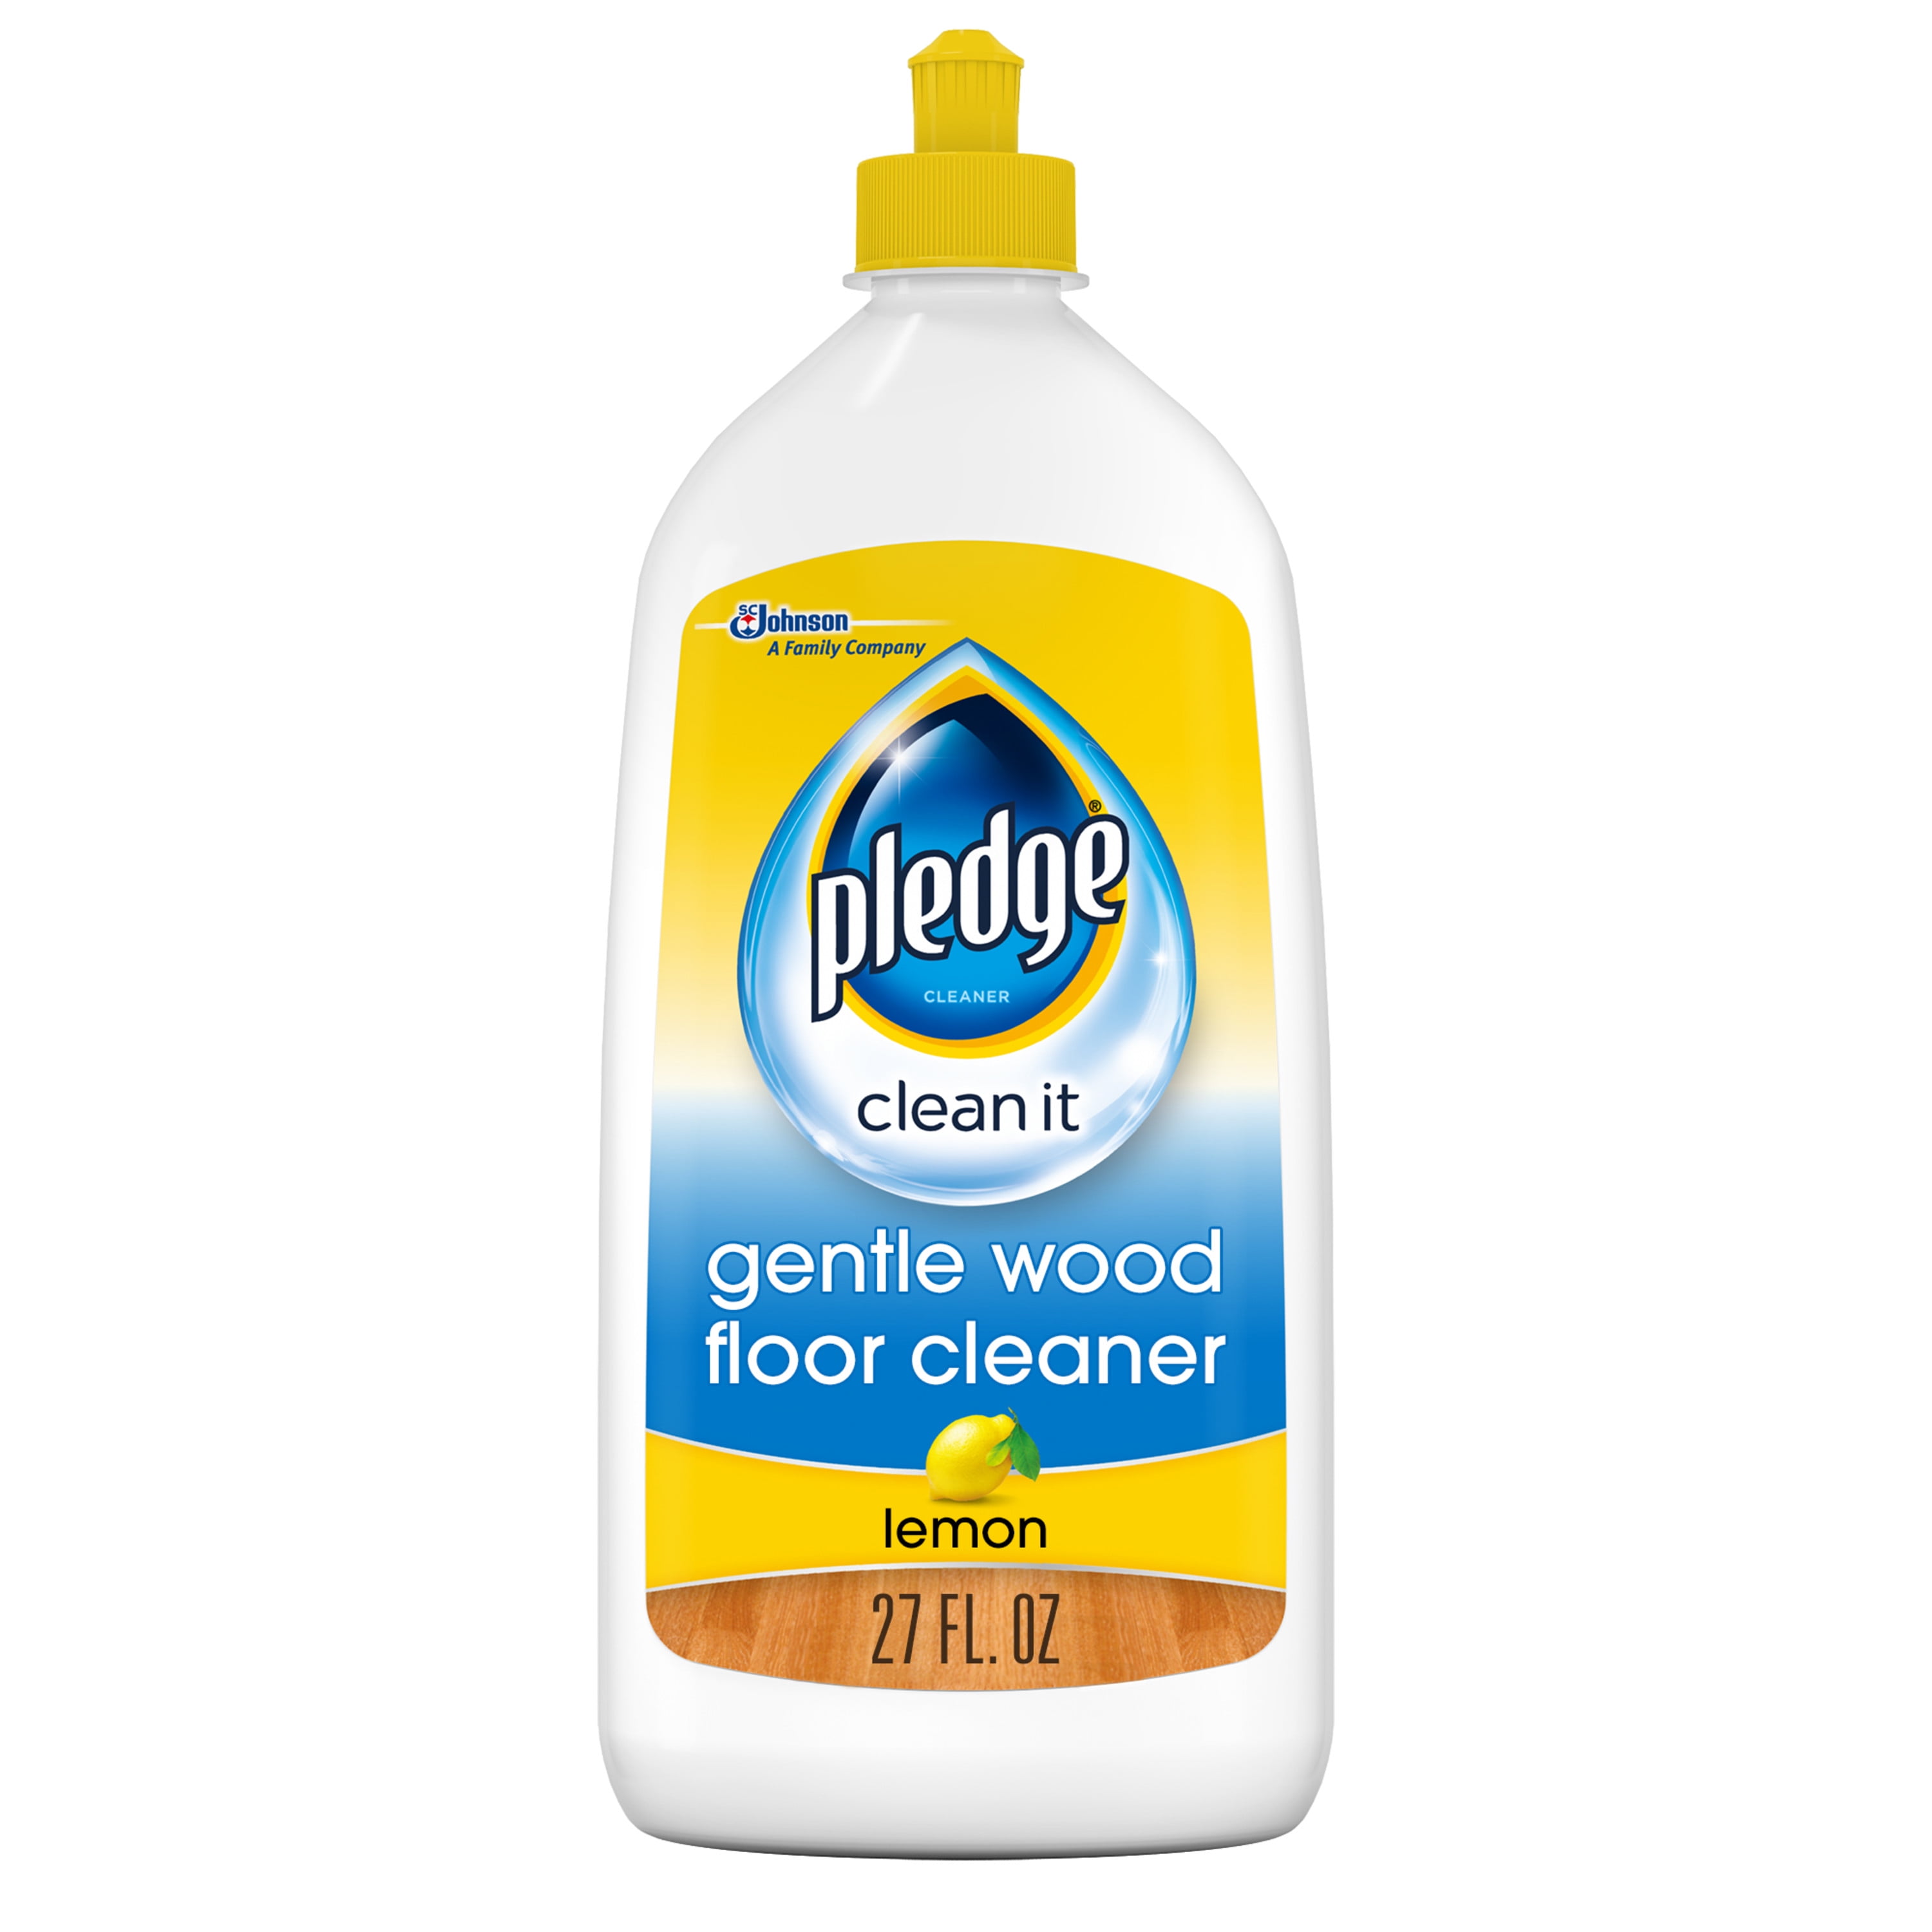 Pledge Gentle Wood Floor Cleaner Lemon, Good Hardwood Floor Cleaner